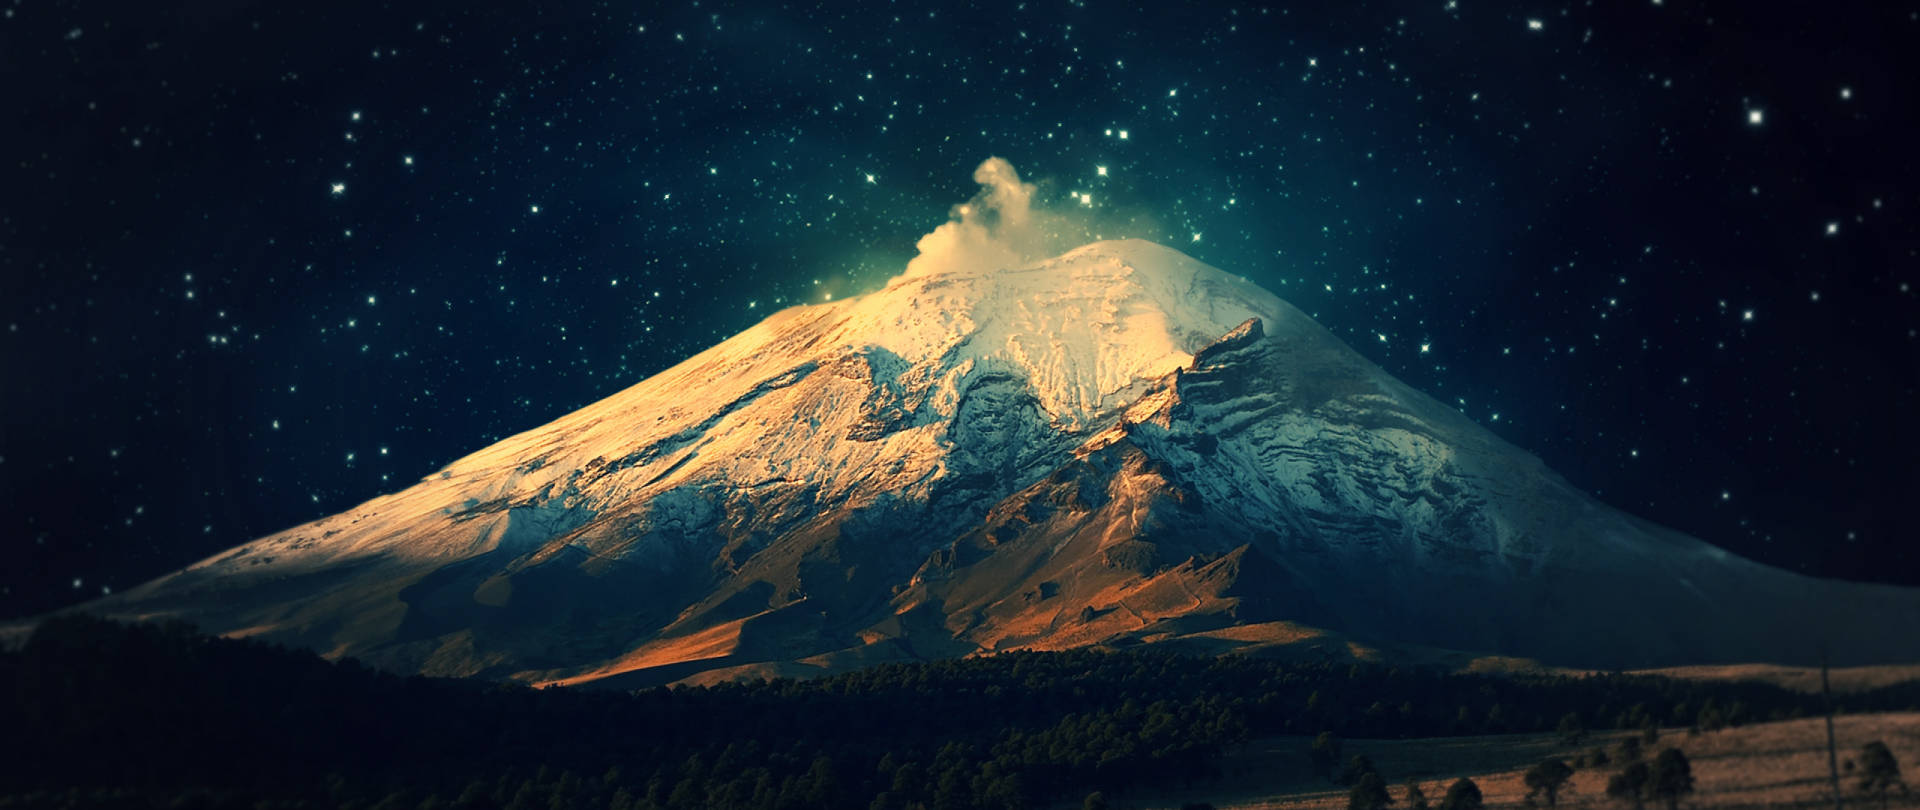 Huge Mountain In Starry Night